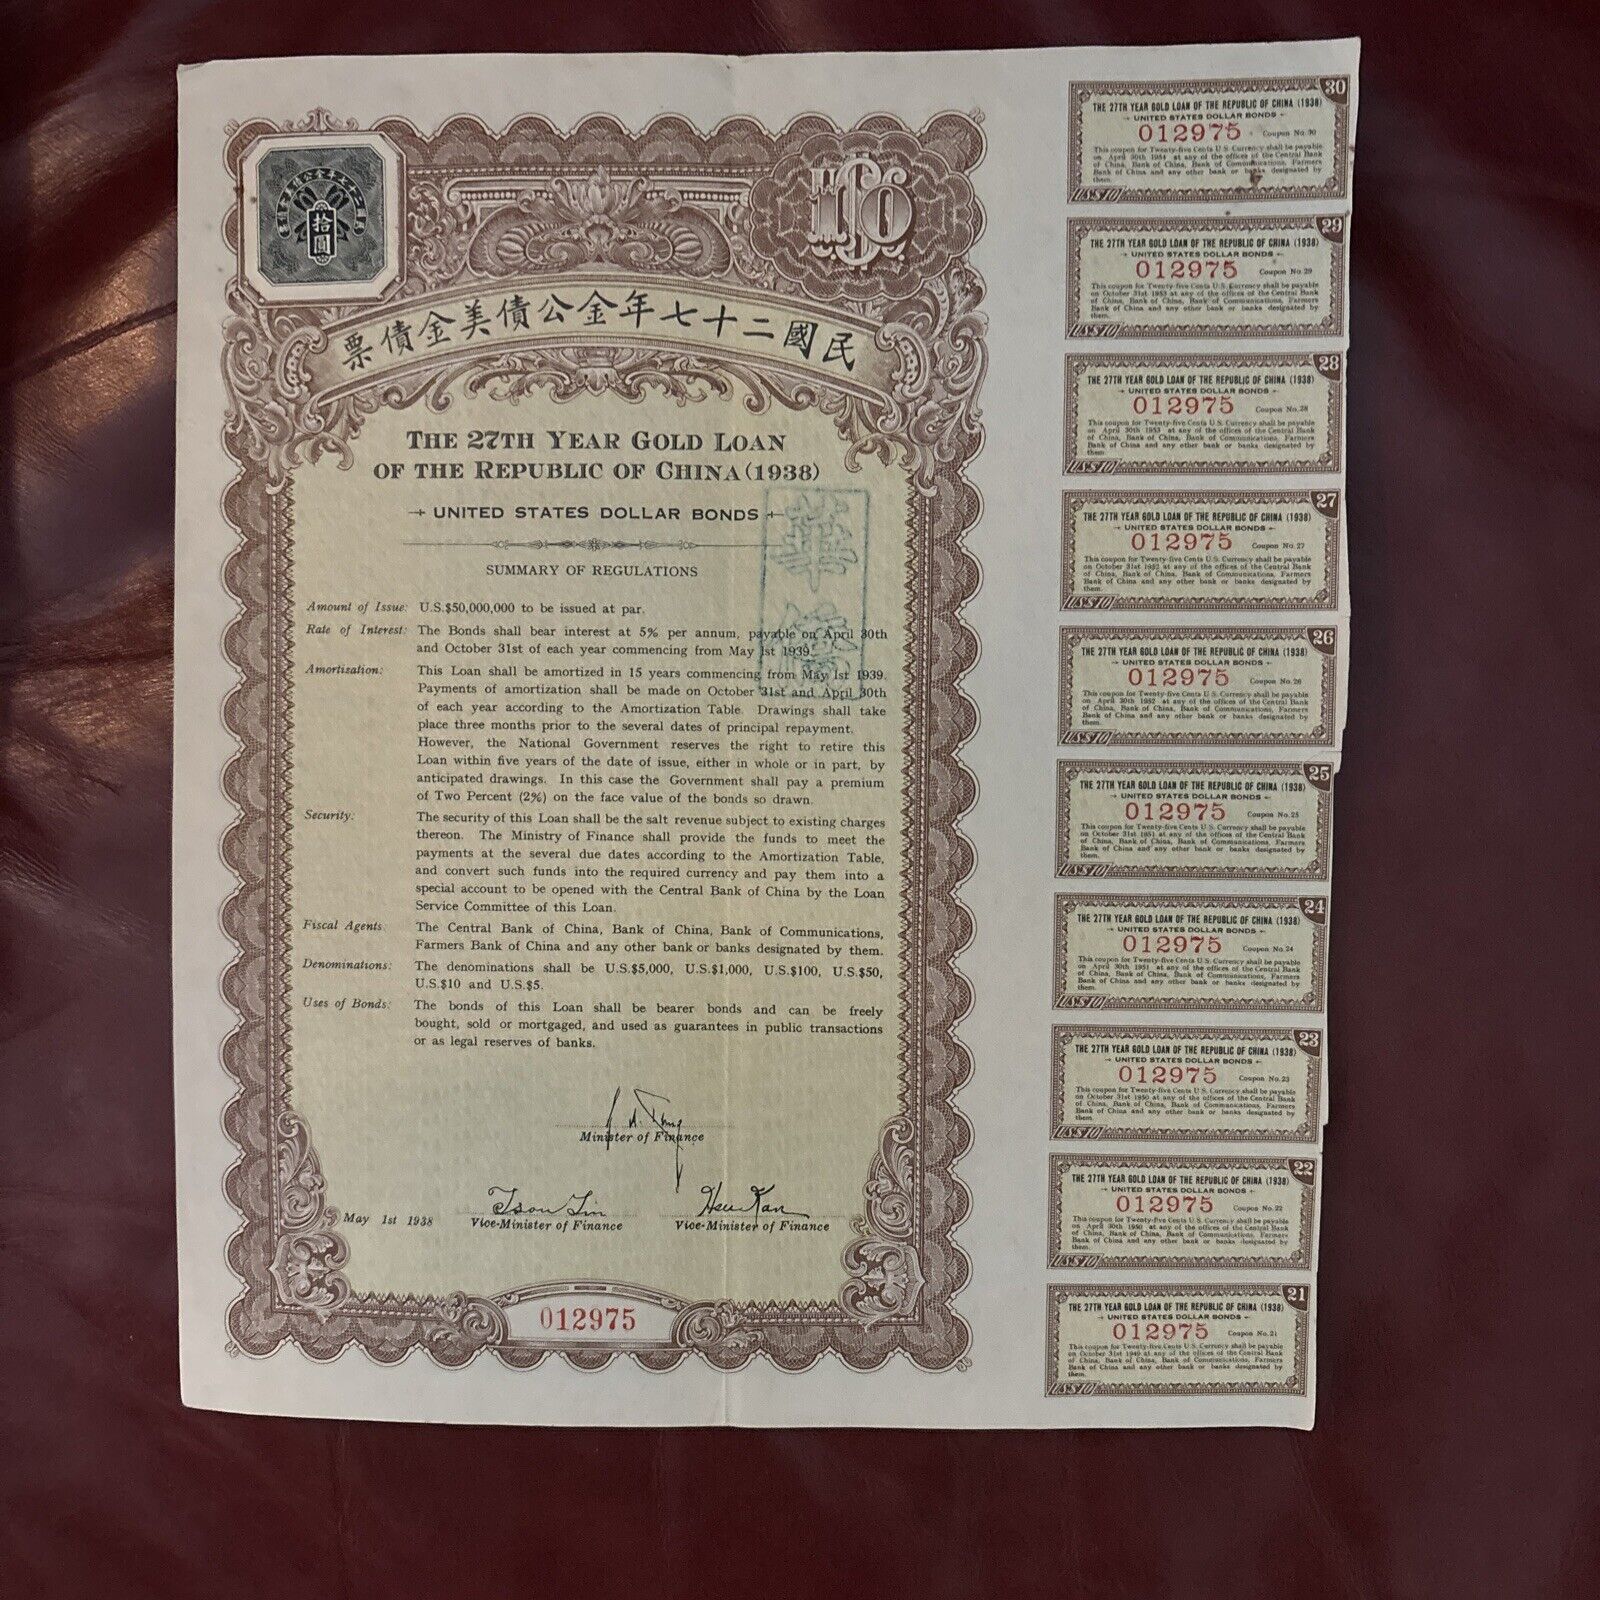 $10 27th Year Gold Loan Bond of the Republic of China (1938)  - US Dollar Bonds